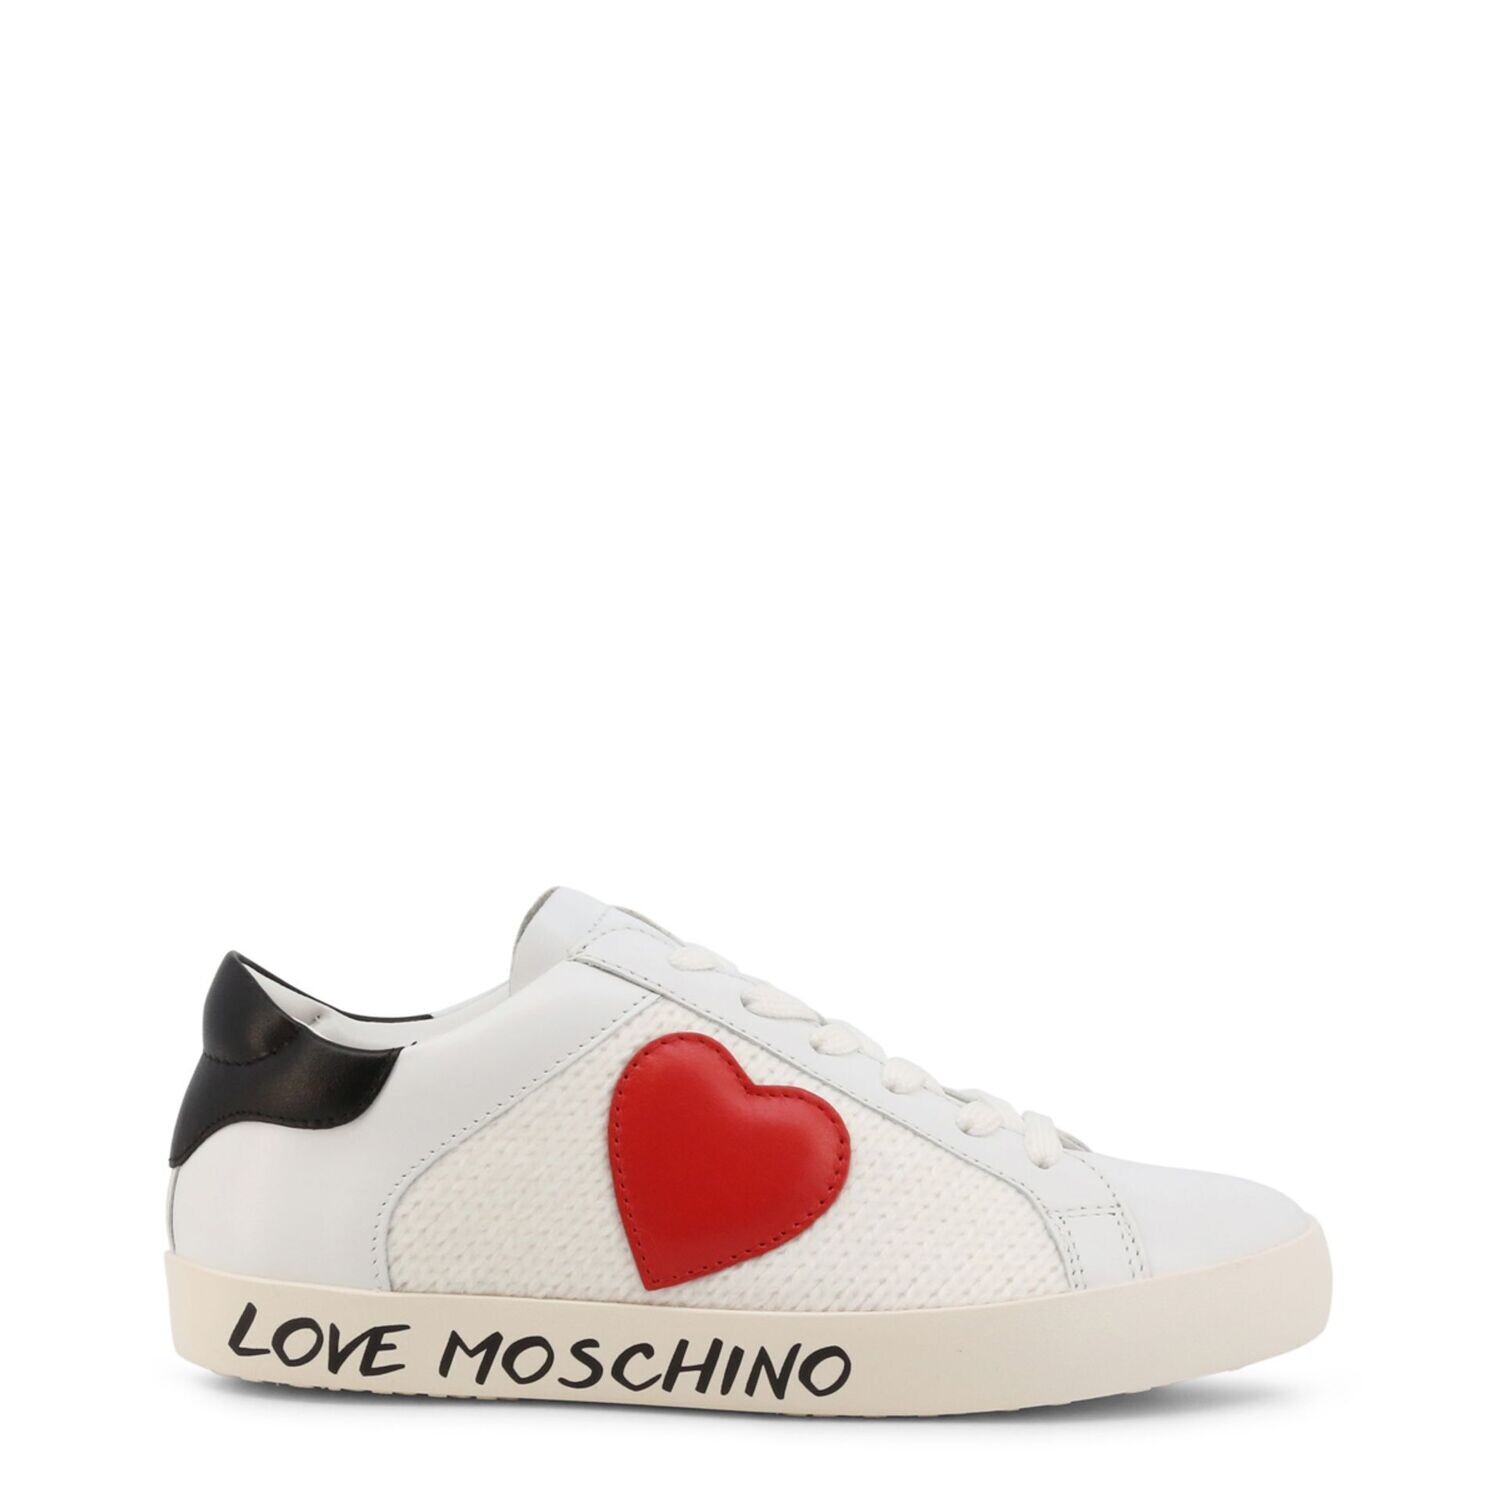 Love Moschino White Trainers, size: EU 36